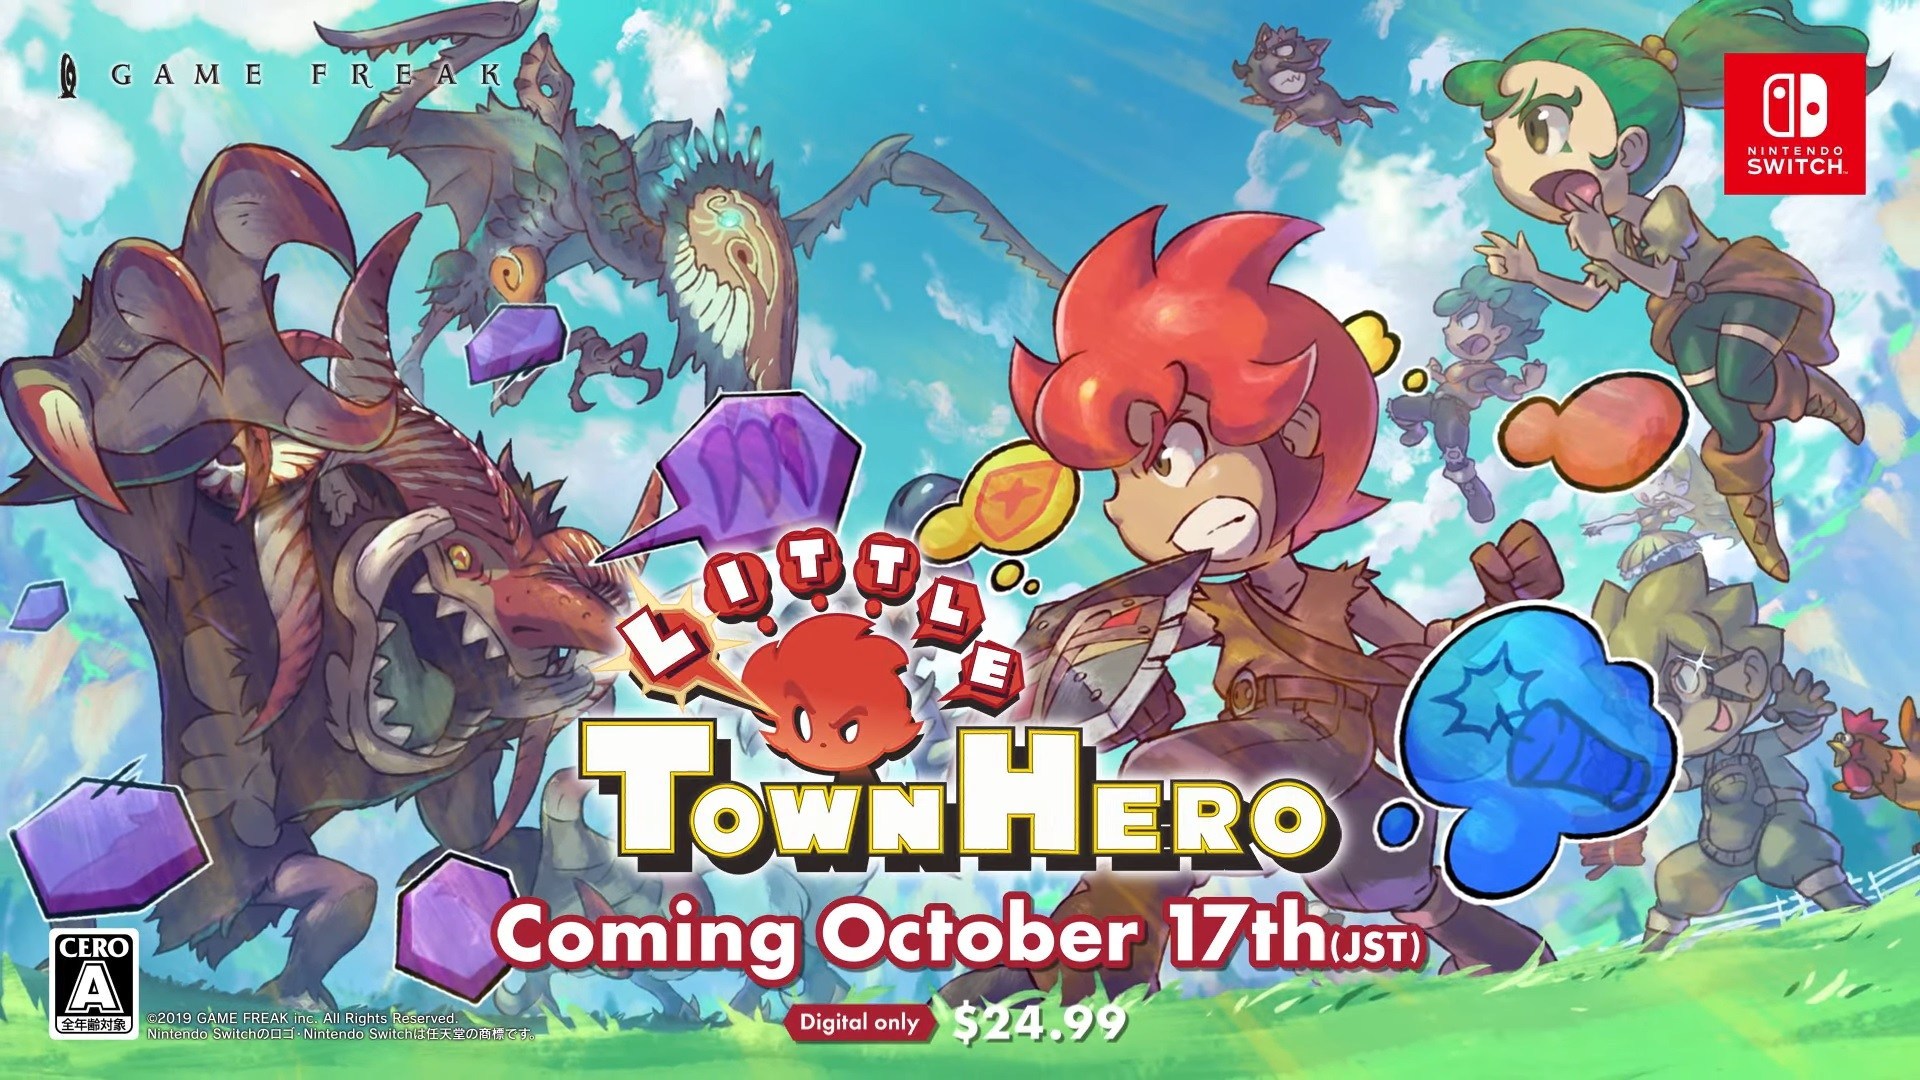 Trailer giới thiệu Character game Little Town Hero